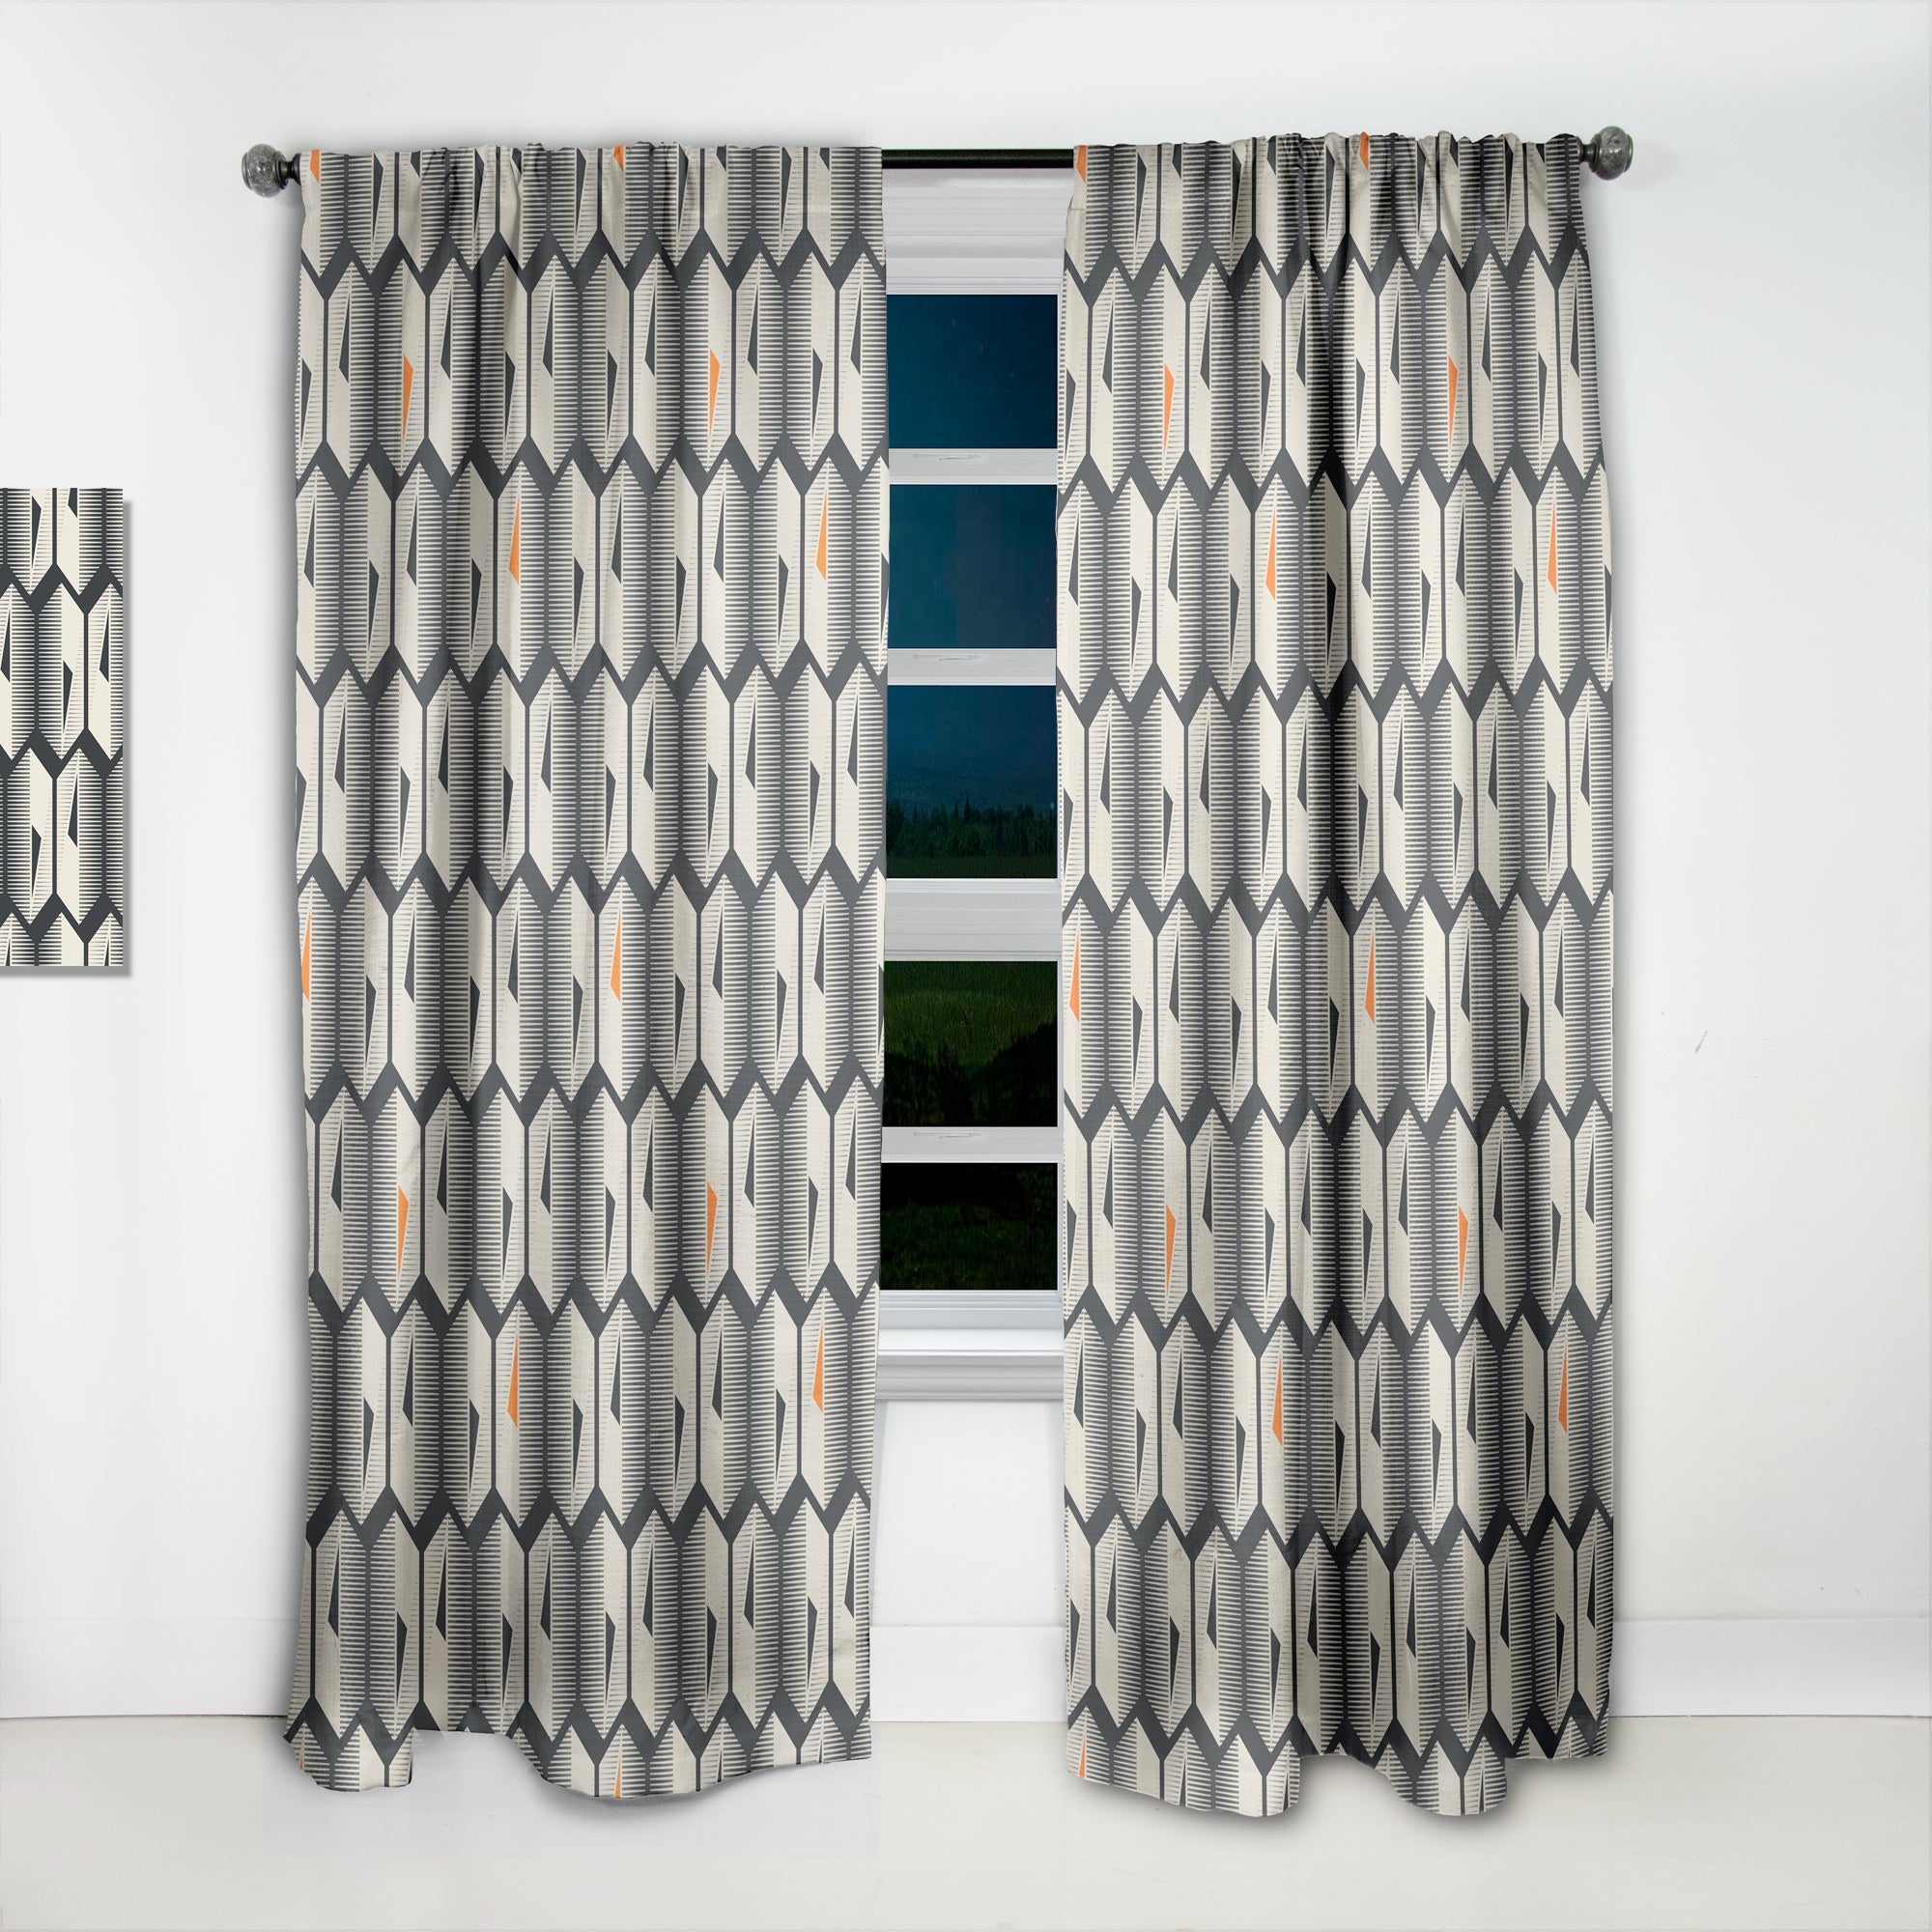 Designart 'Abstract Retro Triangular Geometrics' Mid-Century Modern Curtain Panel